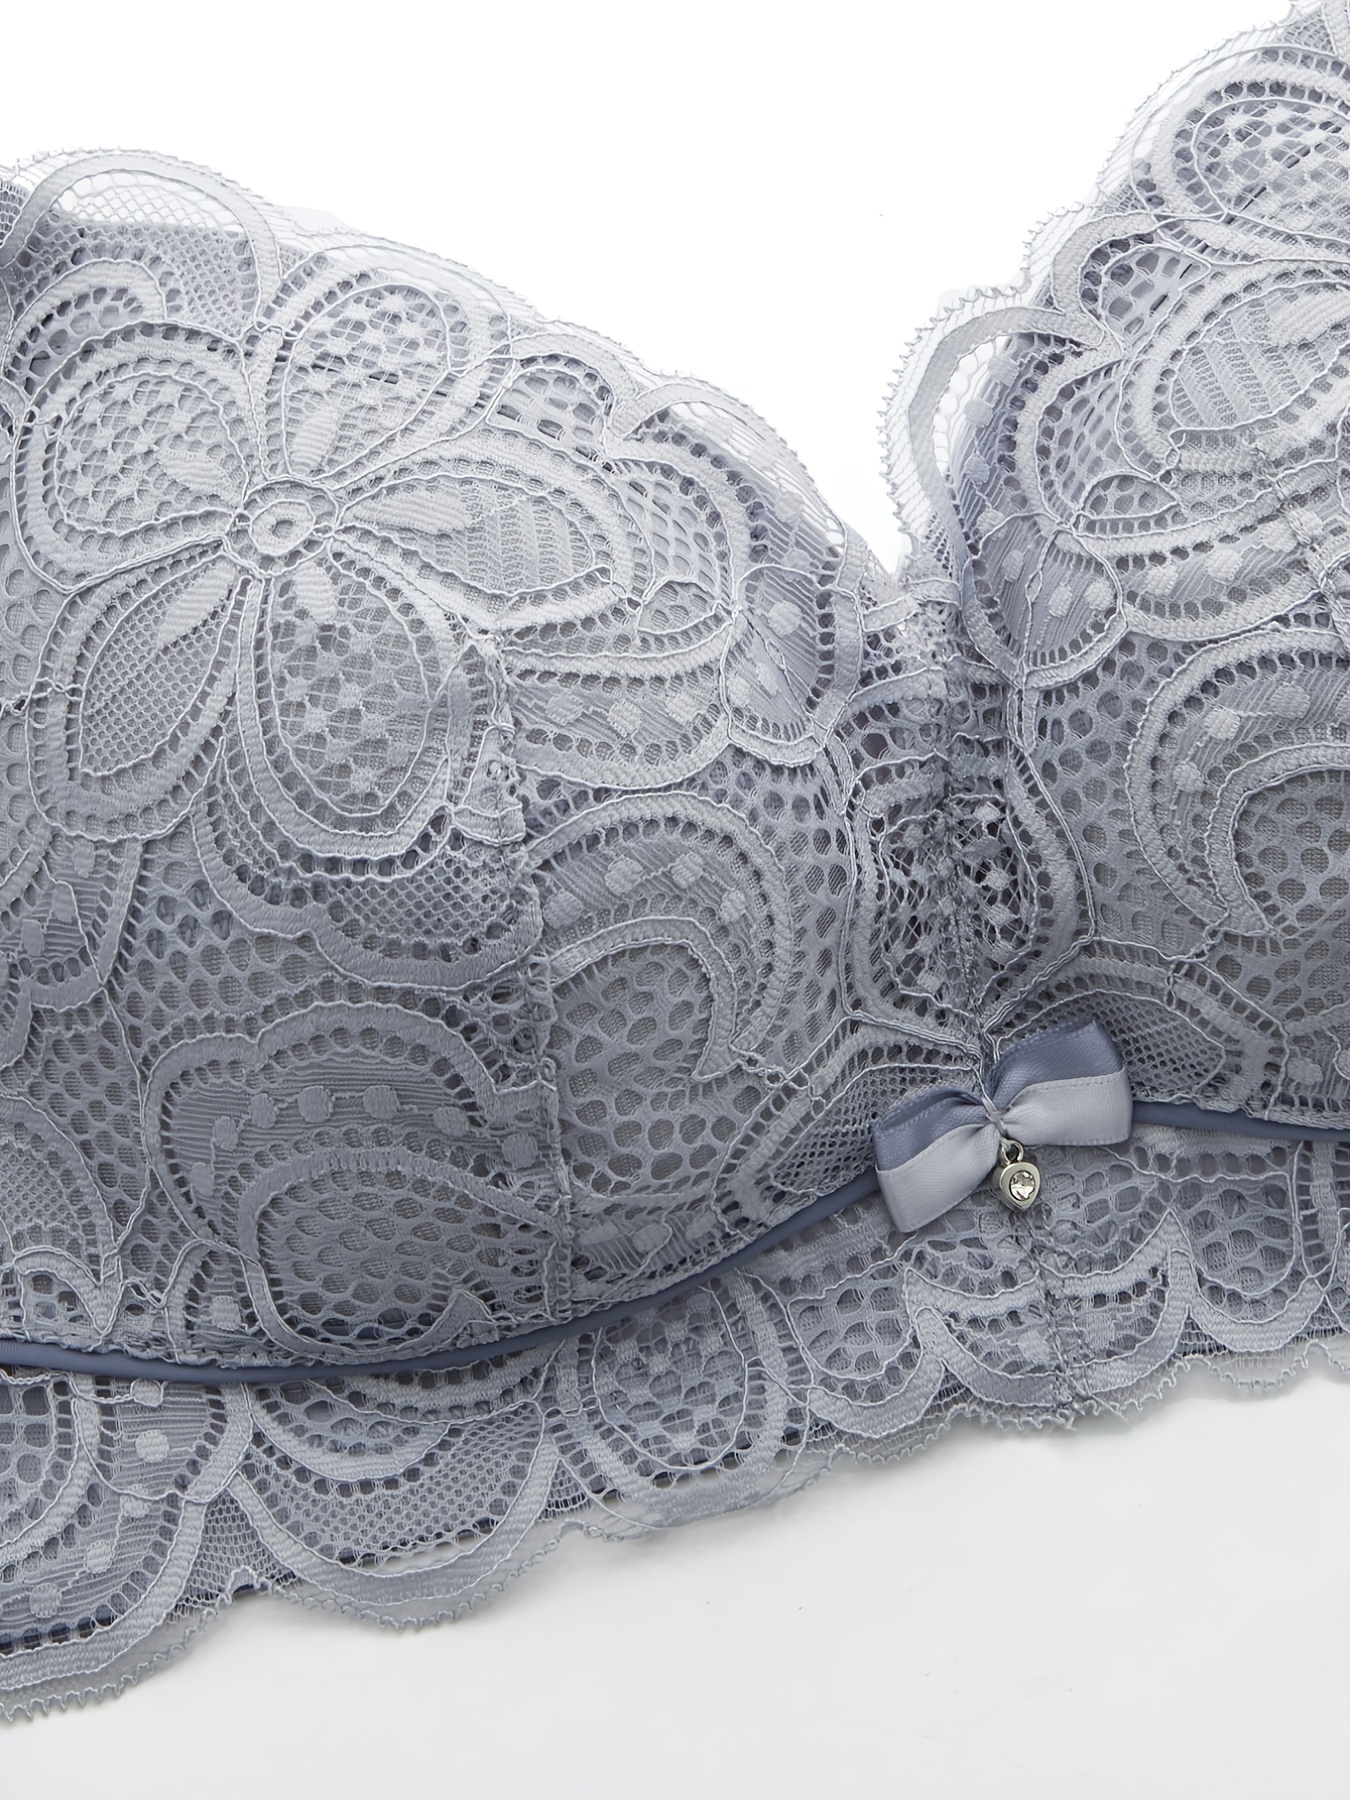 Comfortable full cup bra, mesh inlay, elegant design, C to K-cup